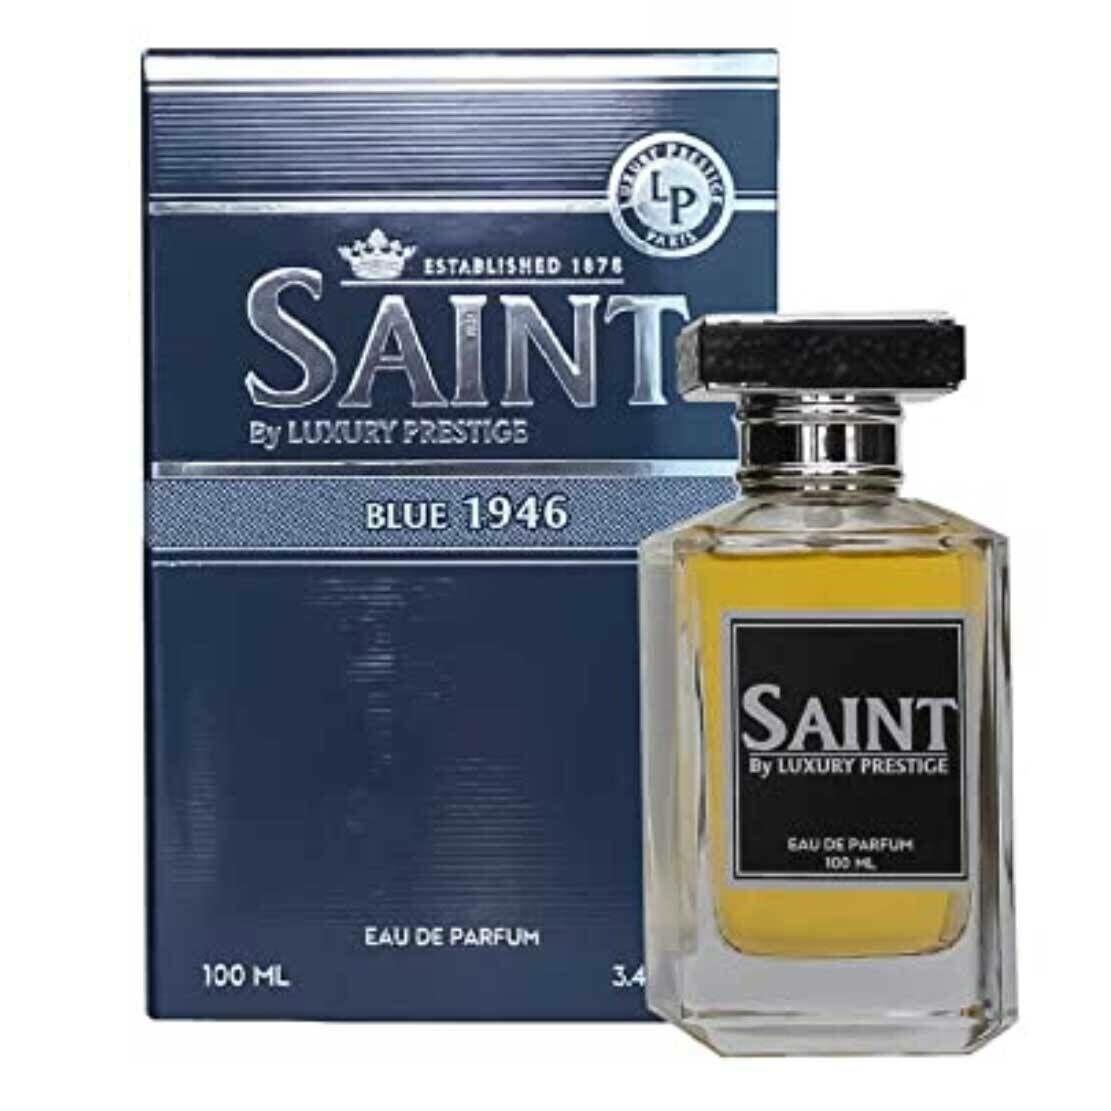 Luxury Prestige Paris Saint Blue 1946 100 ml